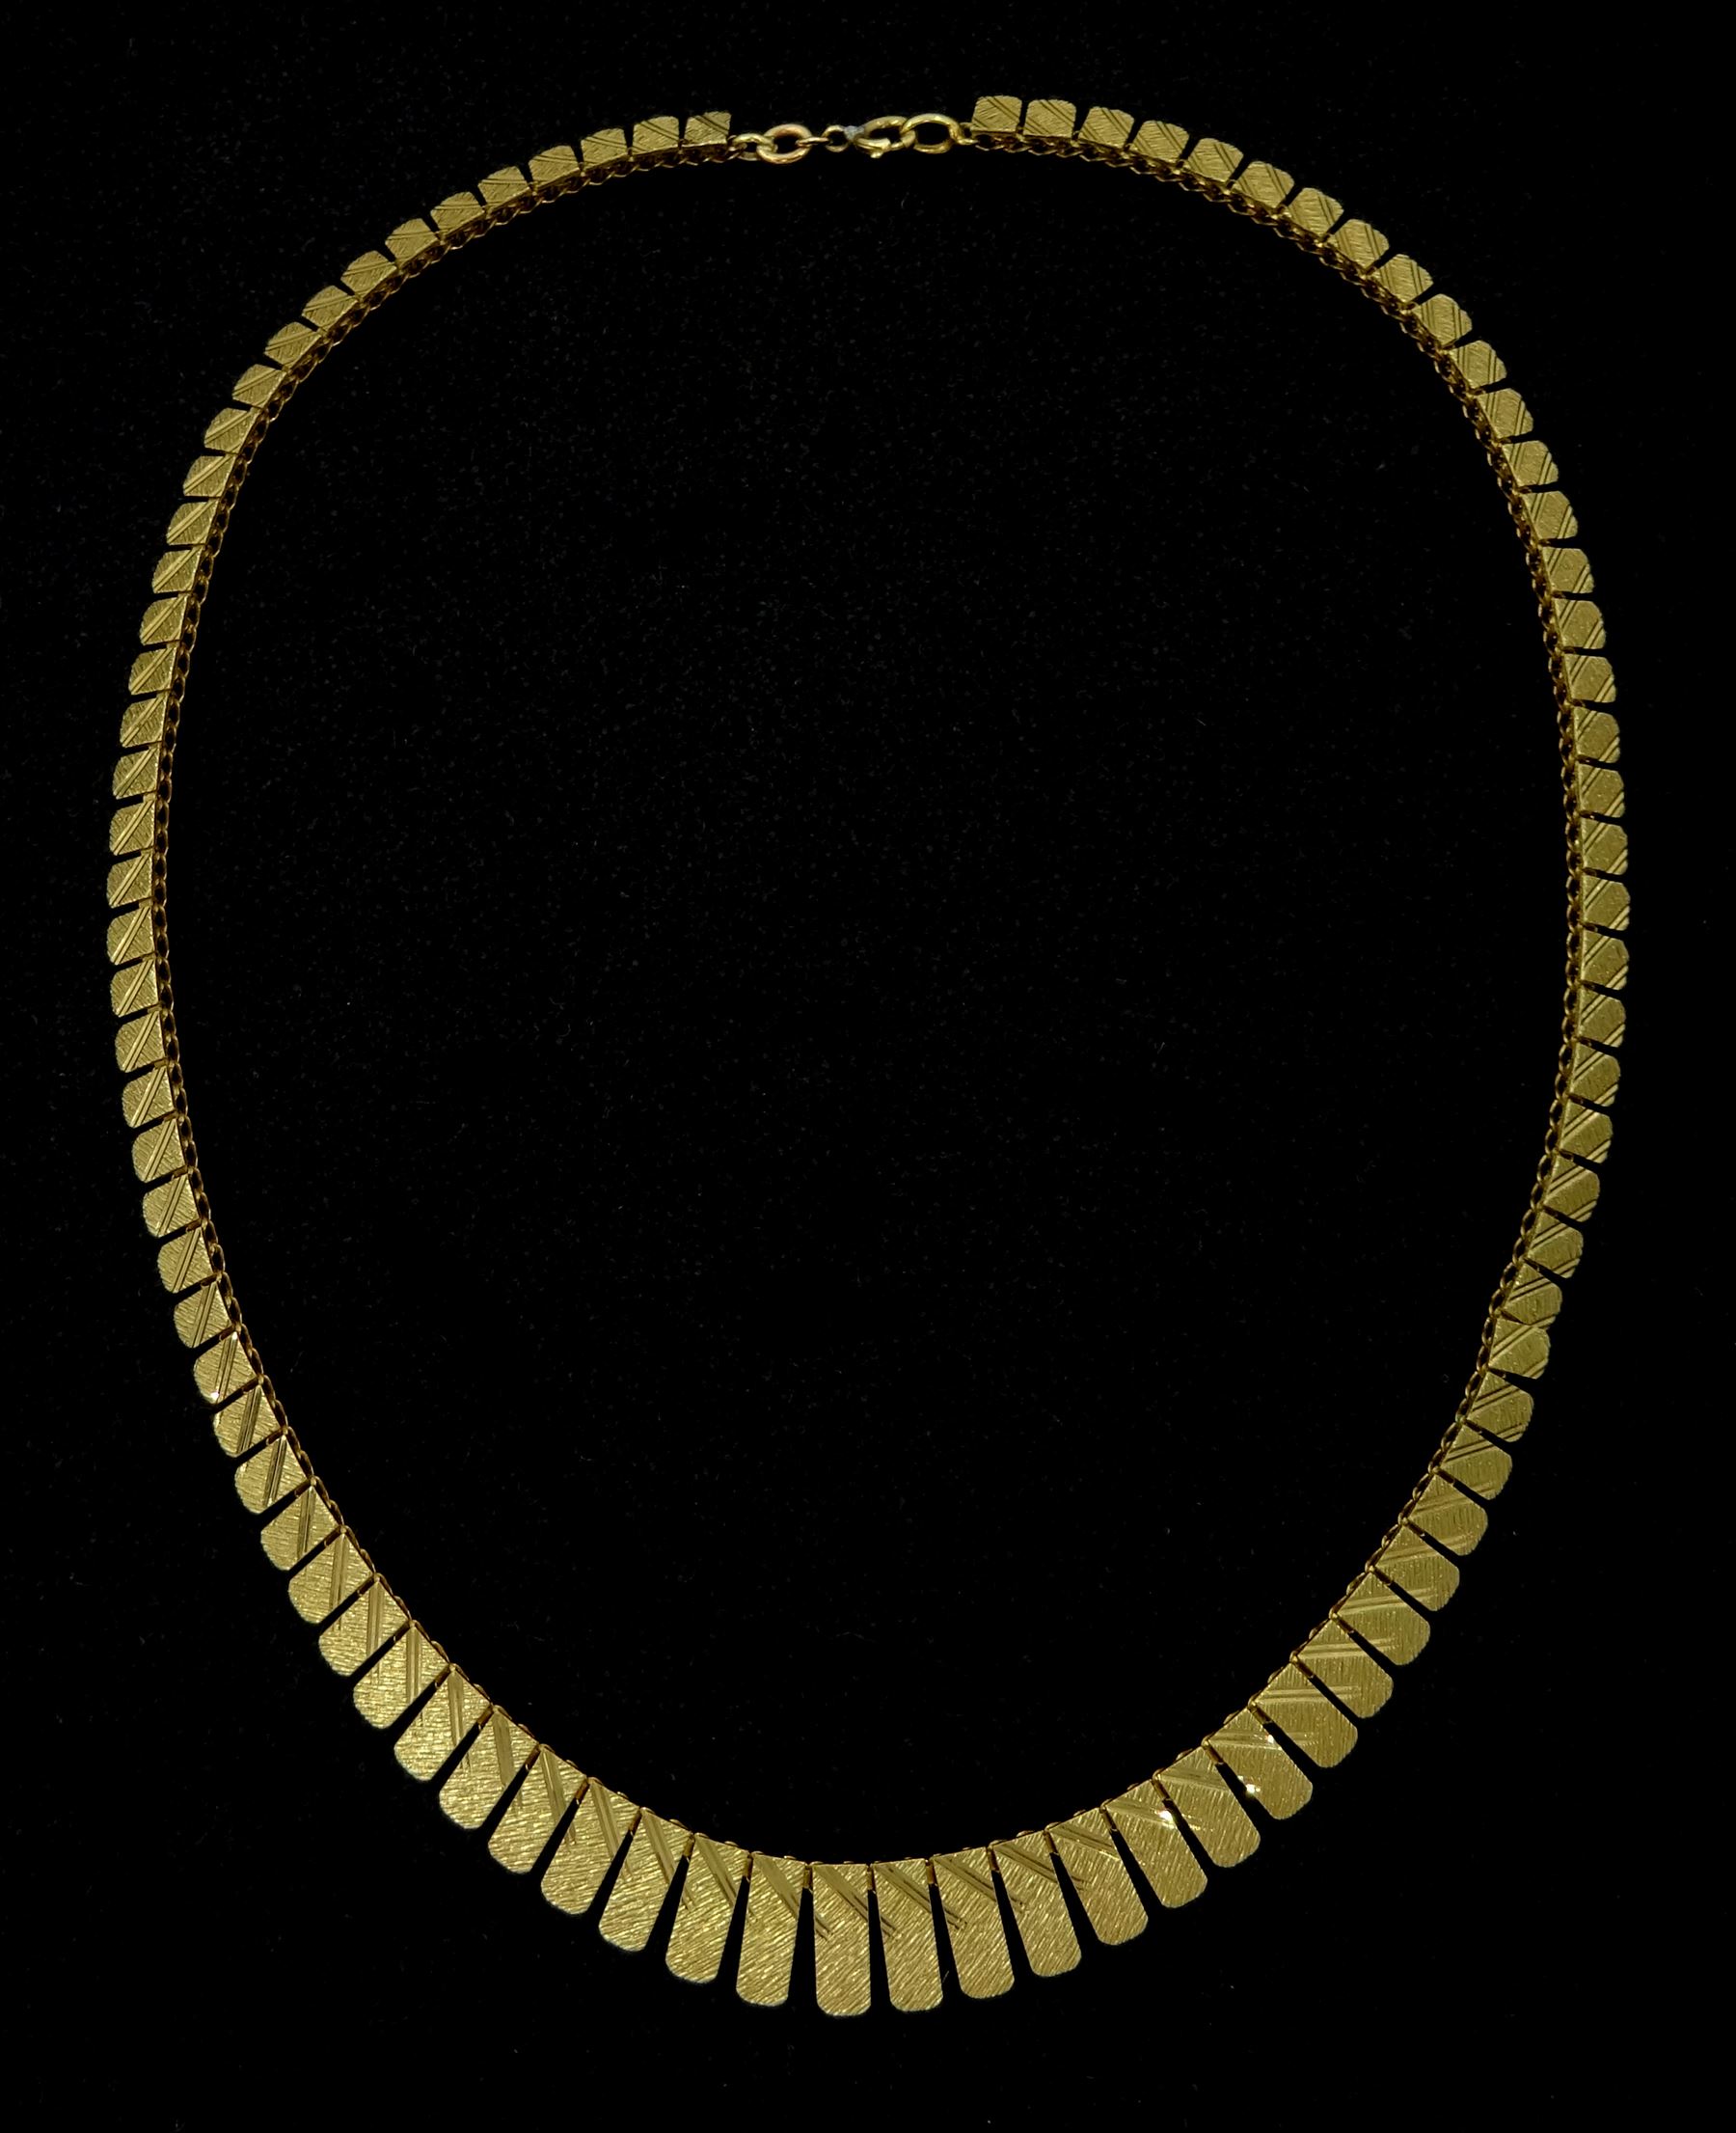 9ct gold textured fringe necklace